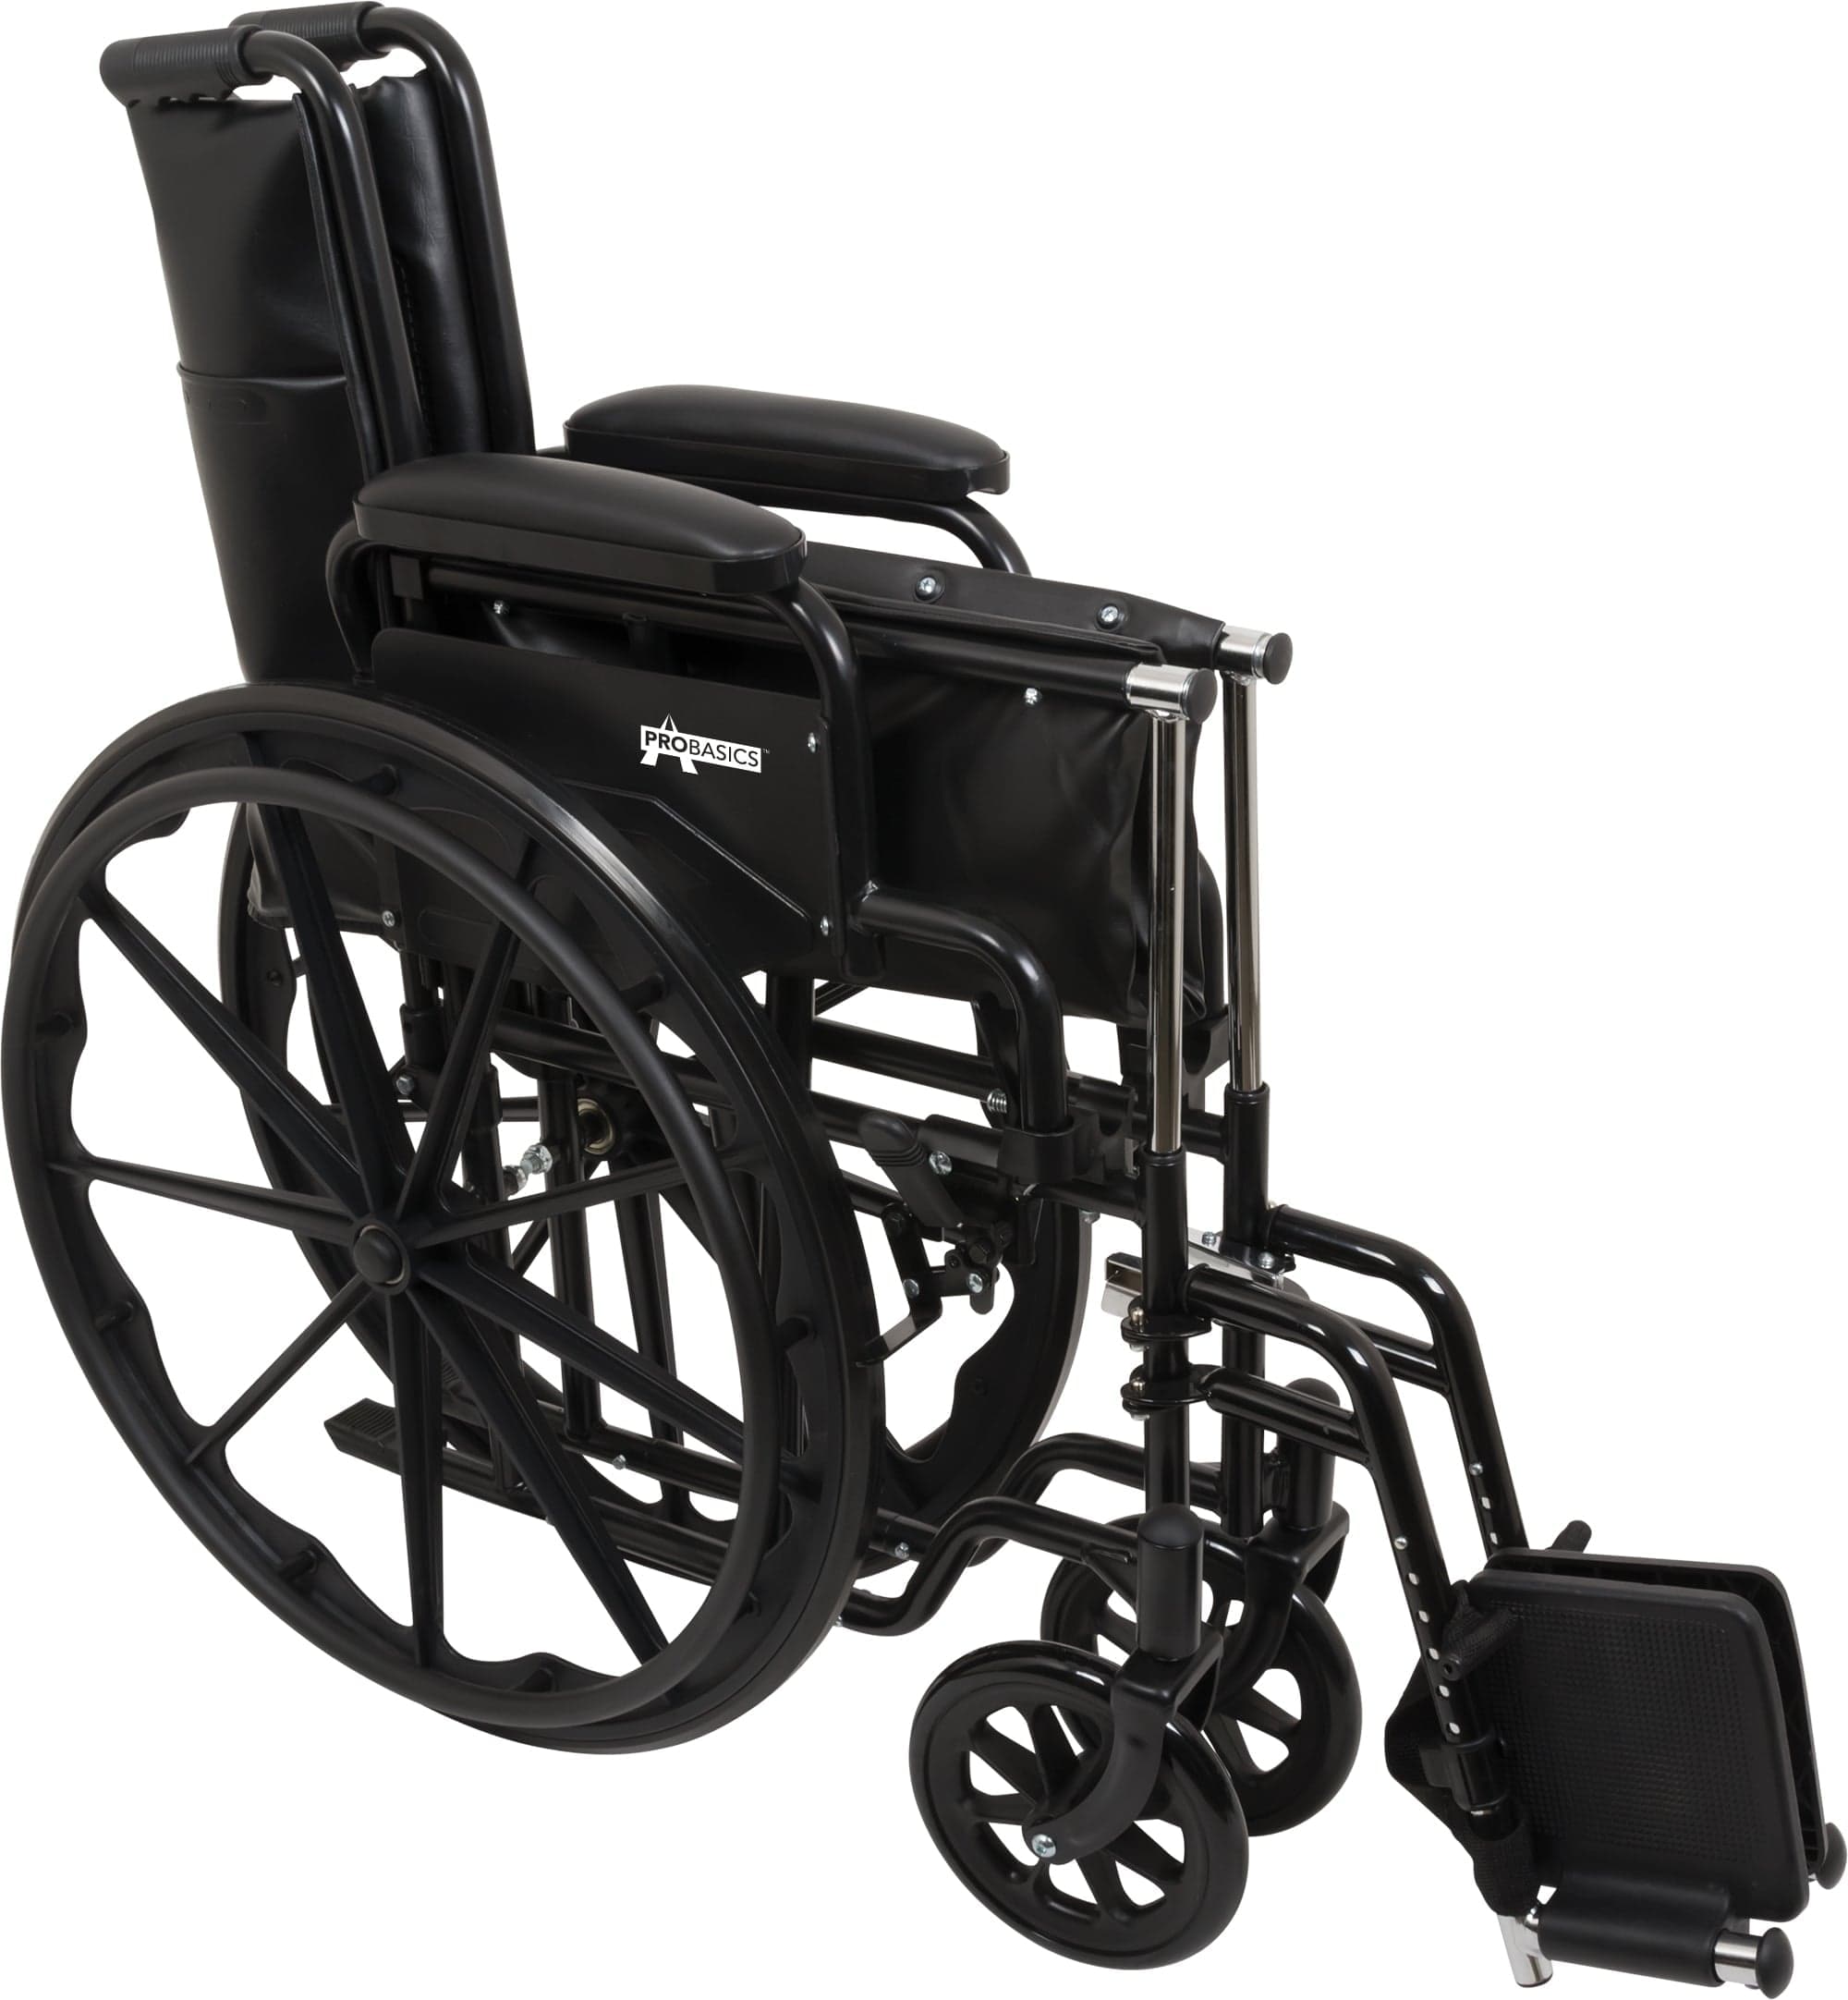 Compass Health Compass Health ProBasics K1 Wheelchair with 18 x 16 Seat, WC11816DE